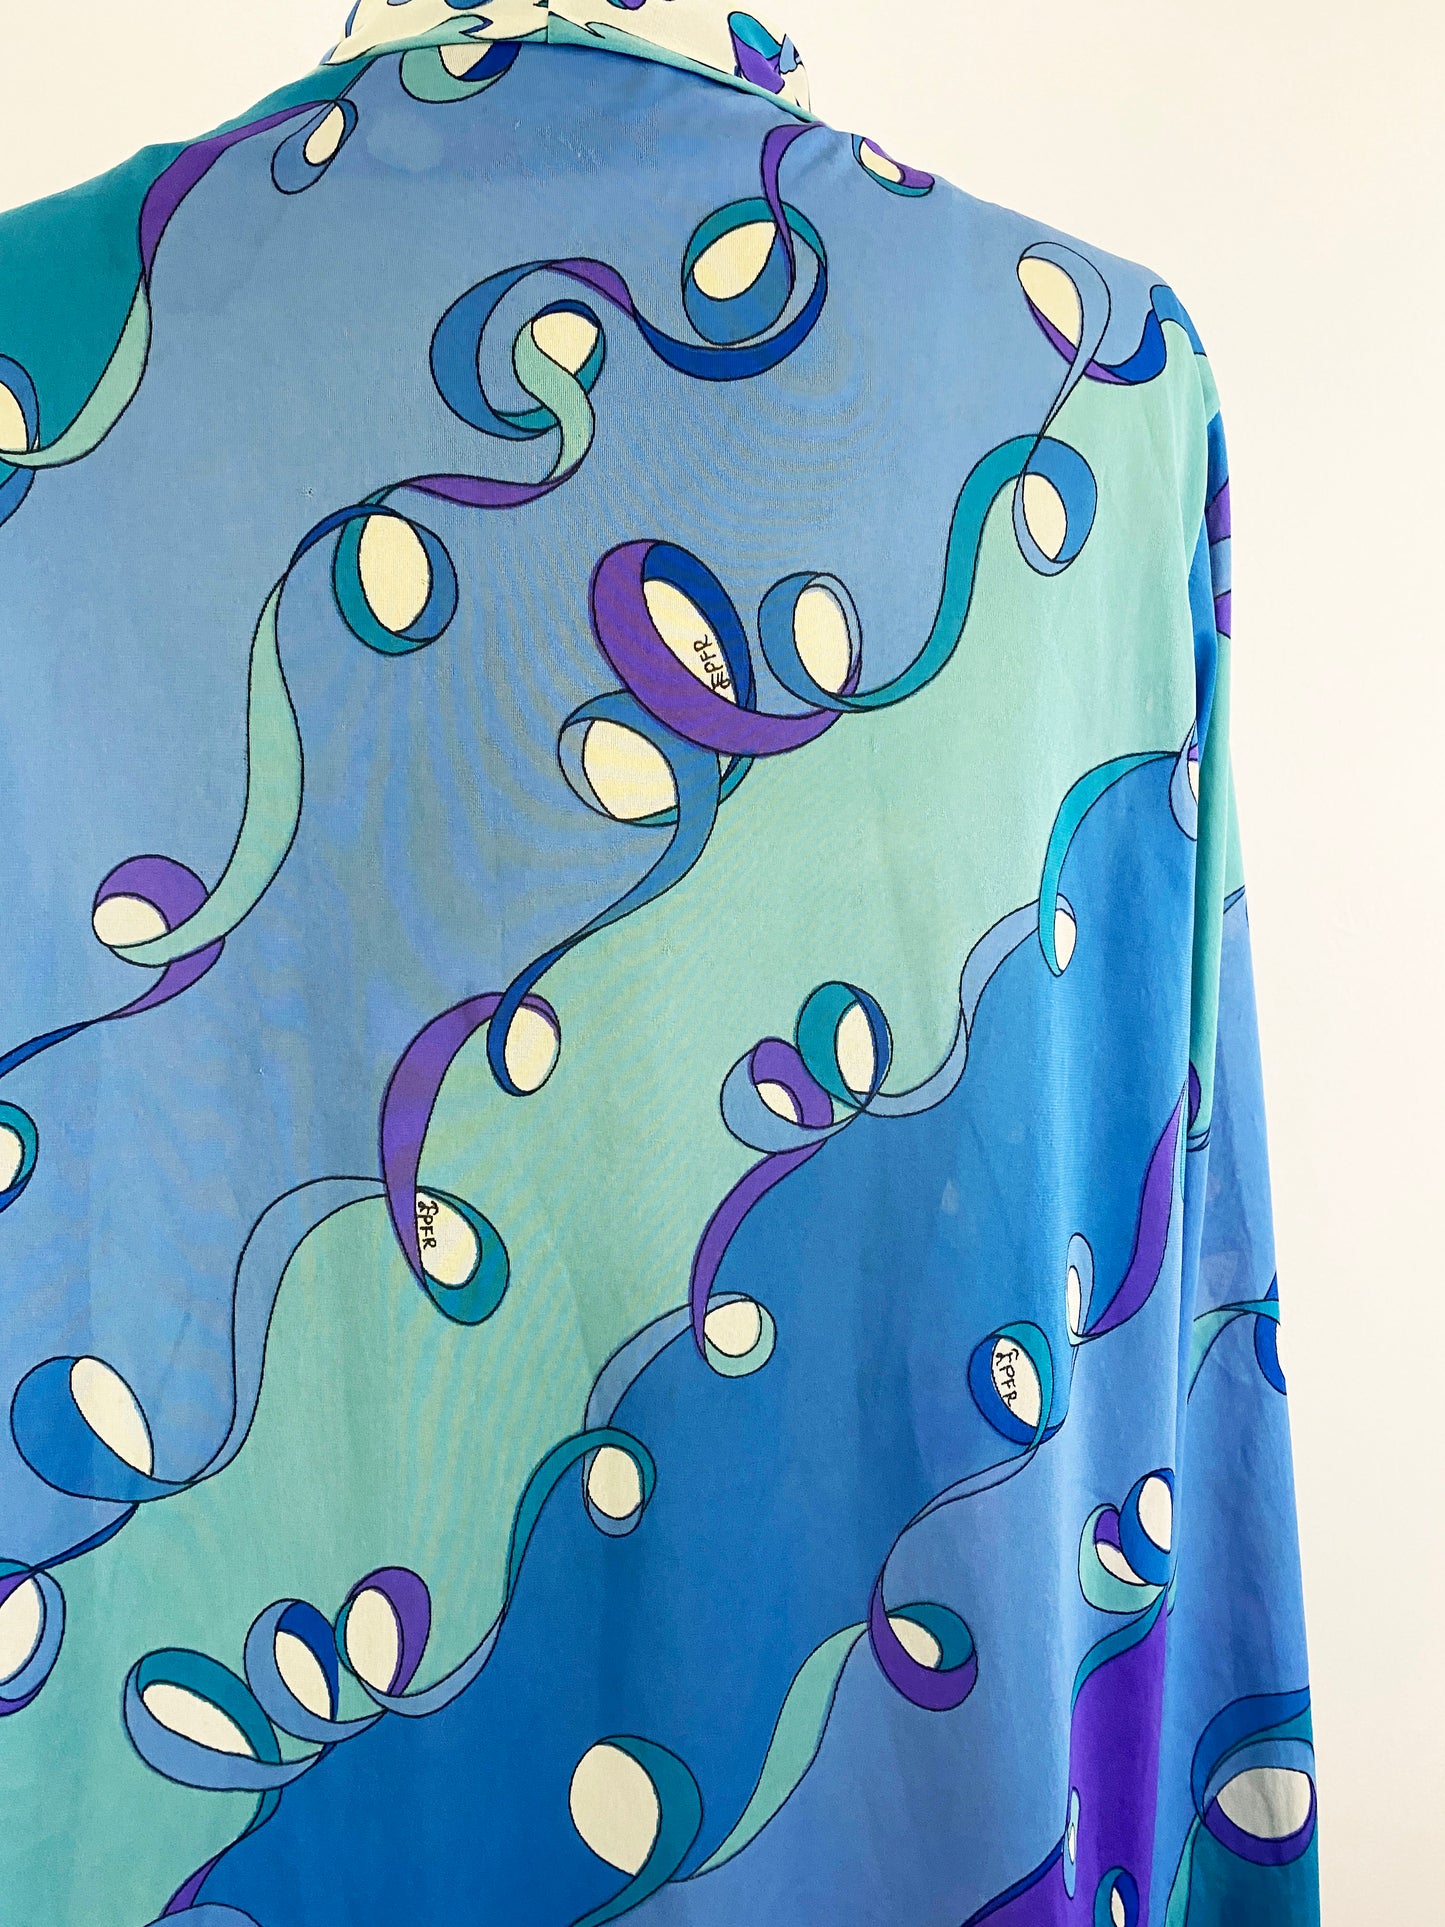 1960's Emilio Pucci Kaleidoscopic Printed Shirt Dress